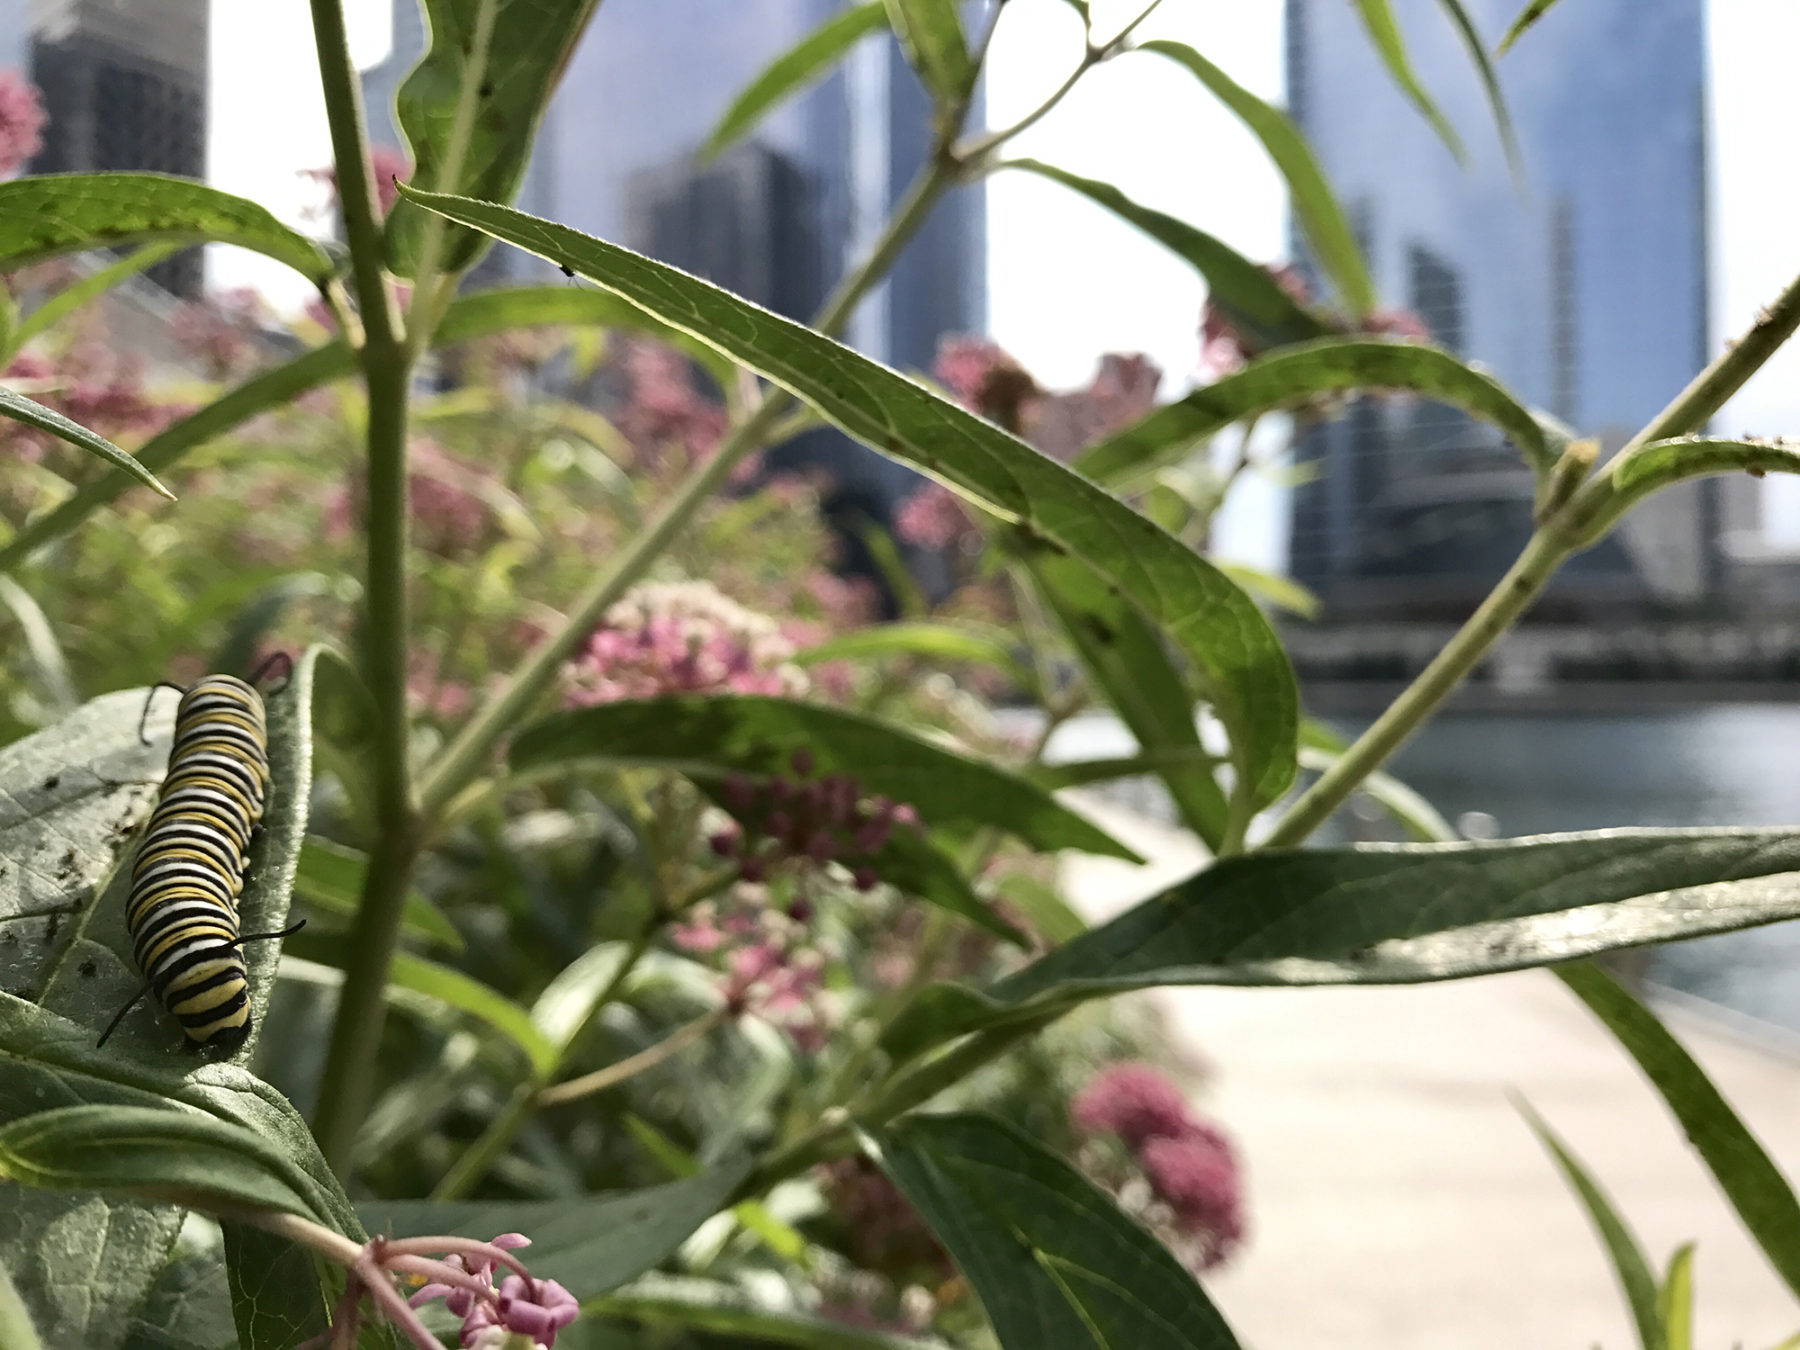 photo of caterpillar on plant